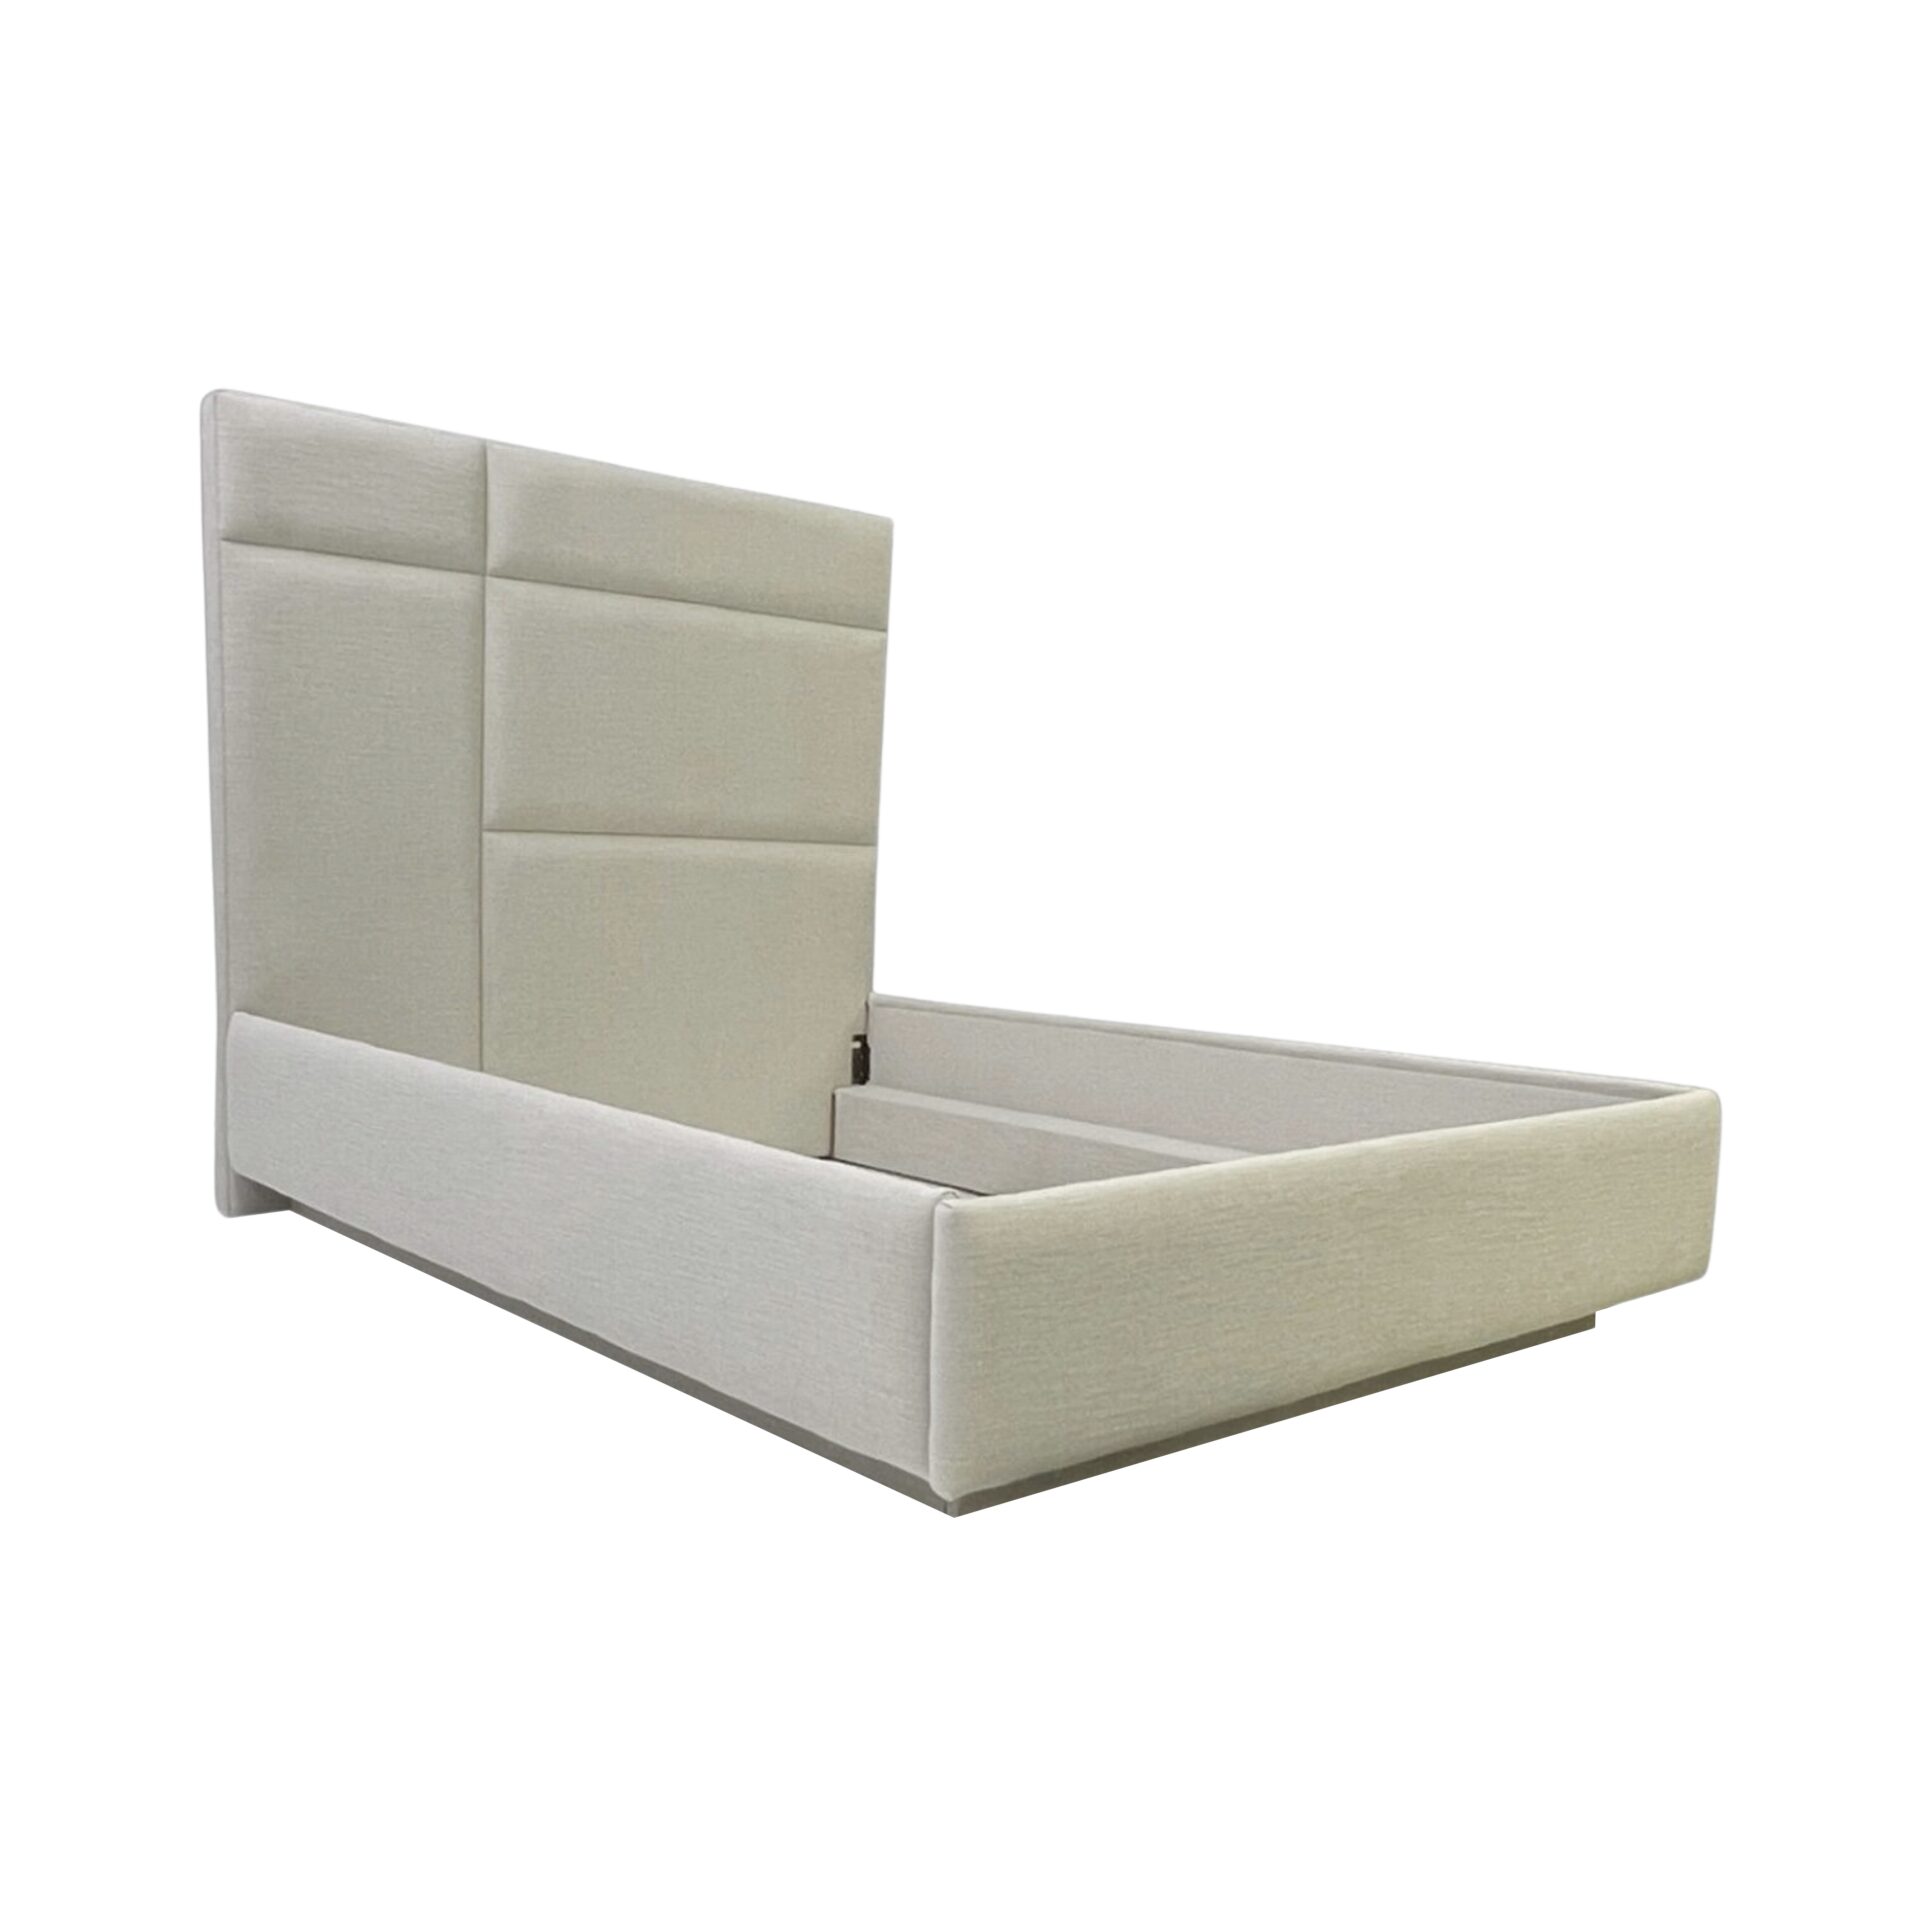 MOOD-freestanding-upholstered-bed-luxury-furniture-blend-home-furnishings